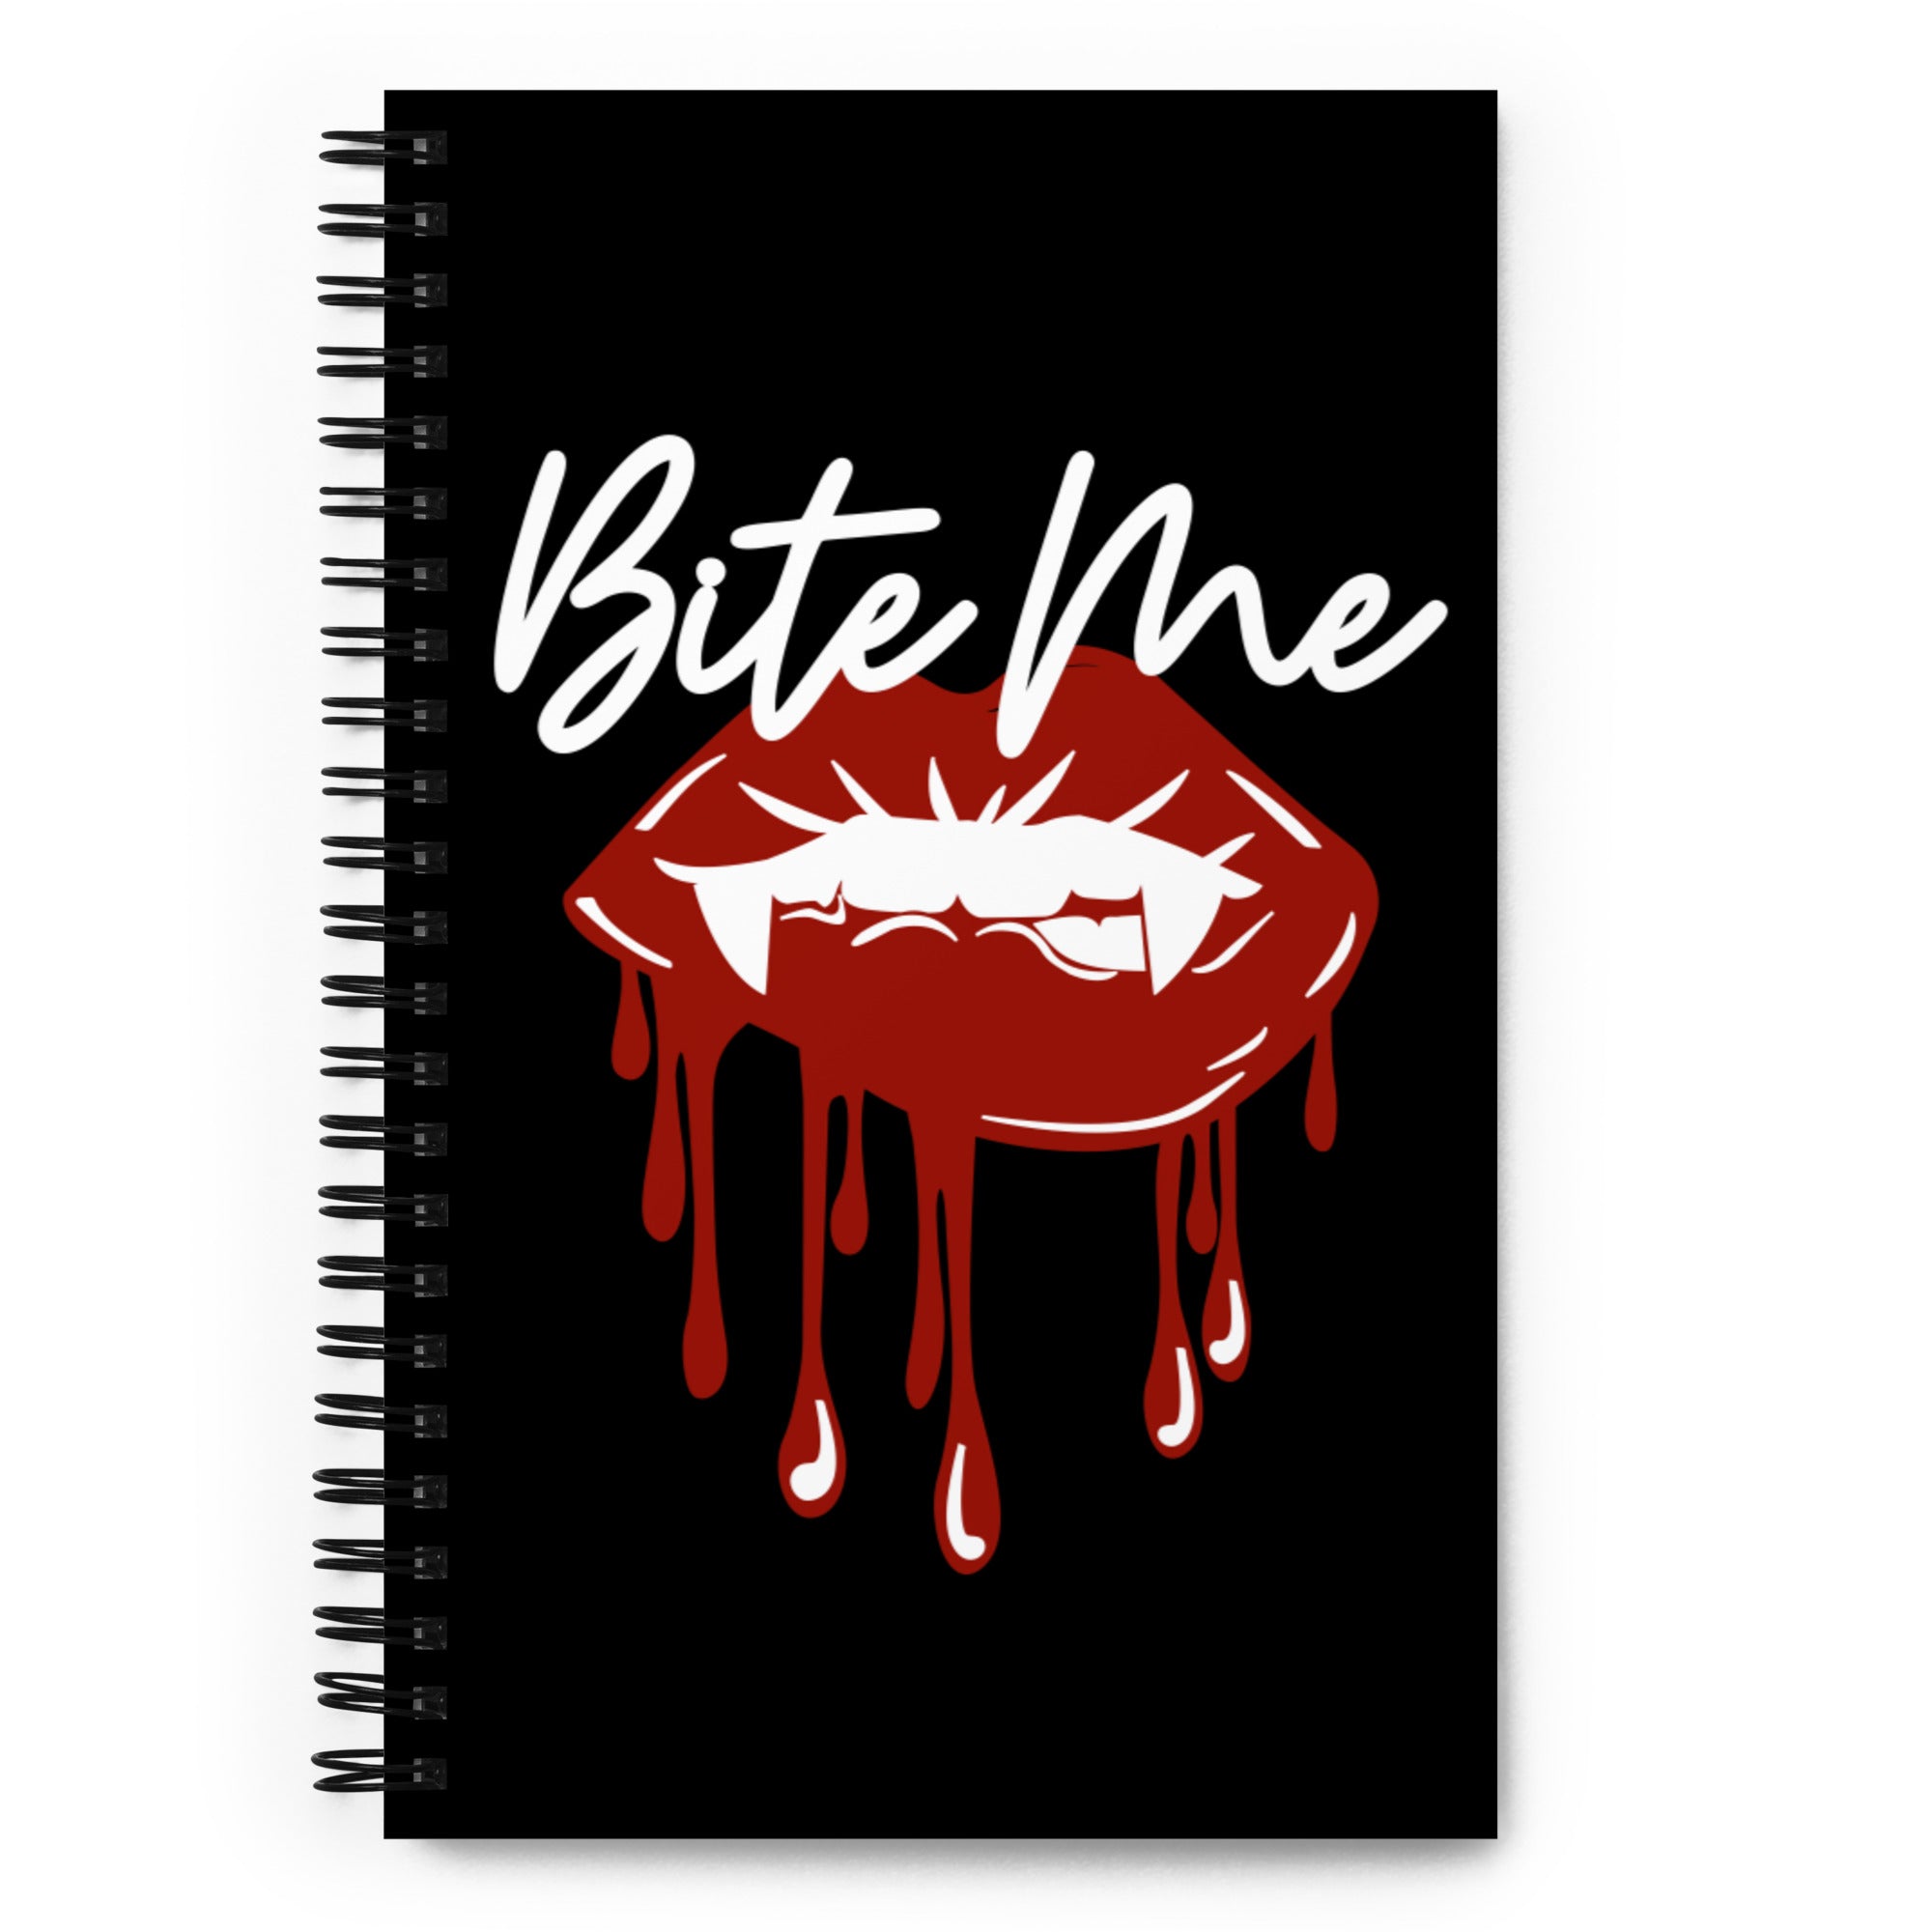 Bite Me spiral notebook for FireDrake Artistry